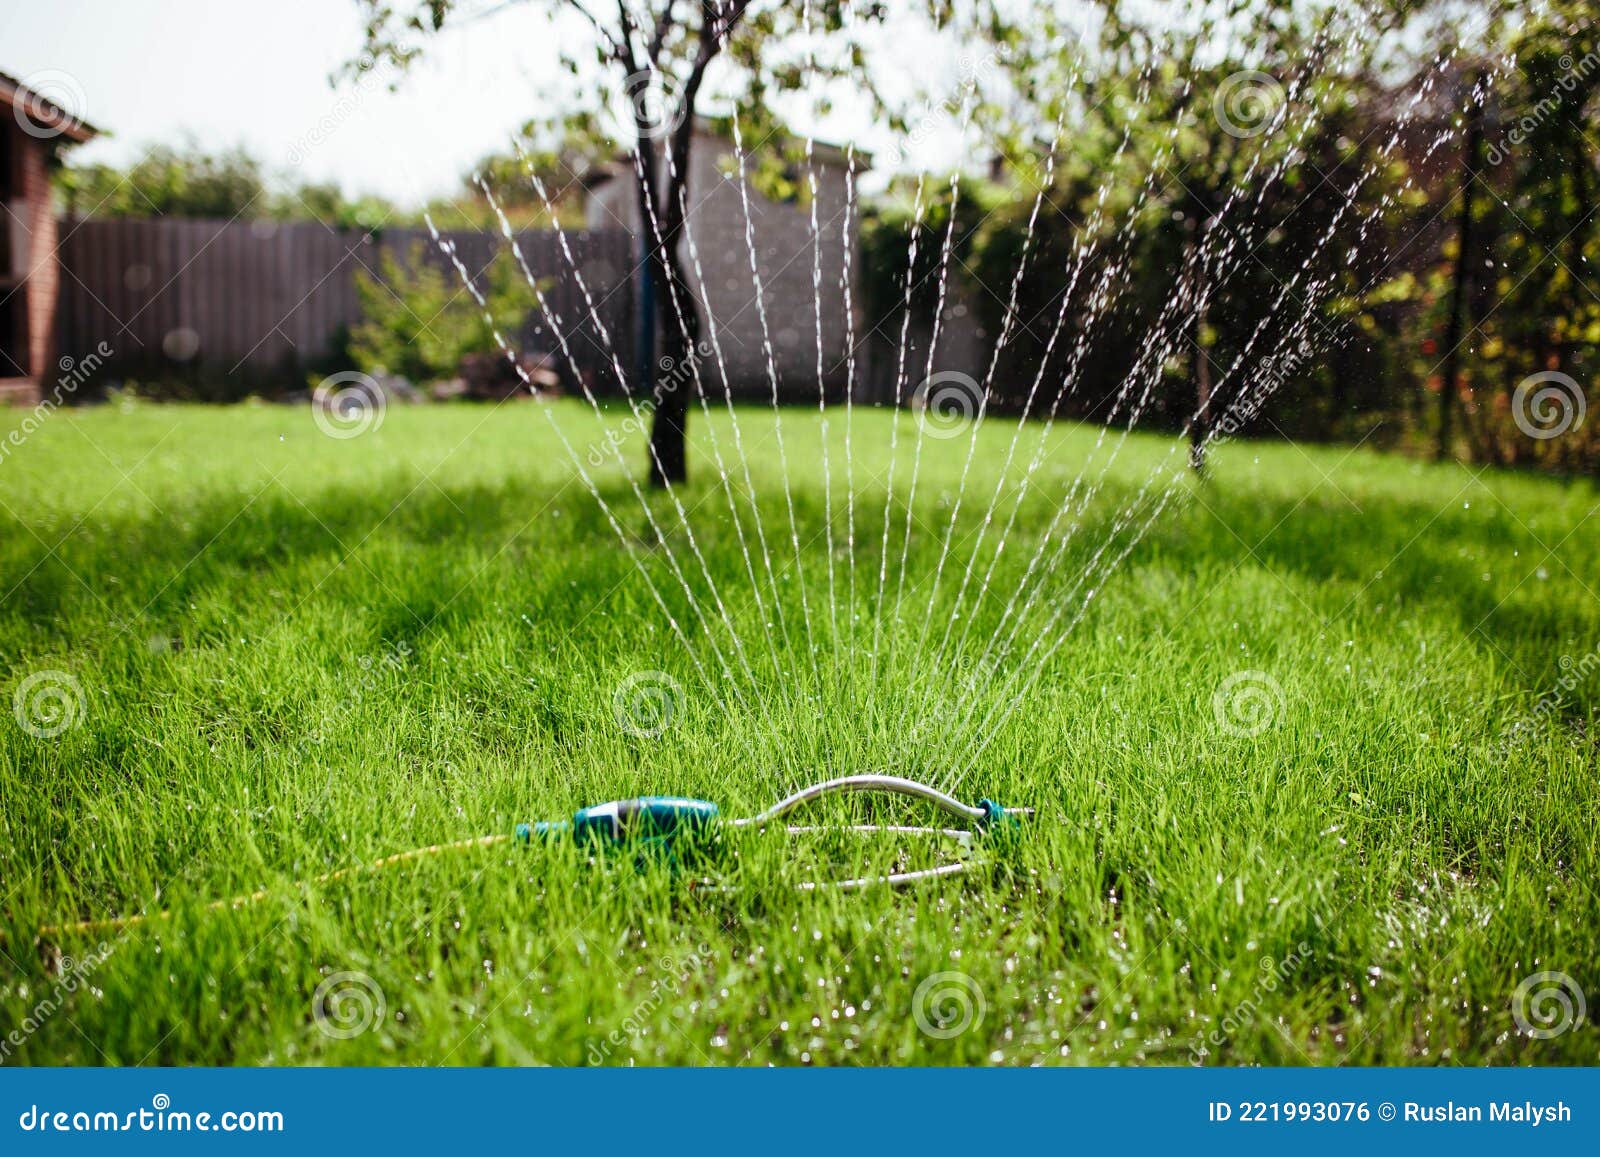 garden sprinkler irrigates the lawn, gardening and landscaping concept